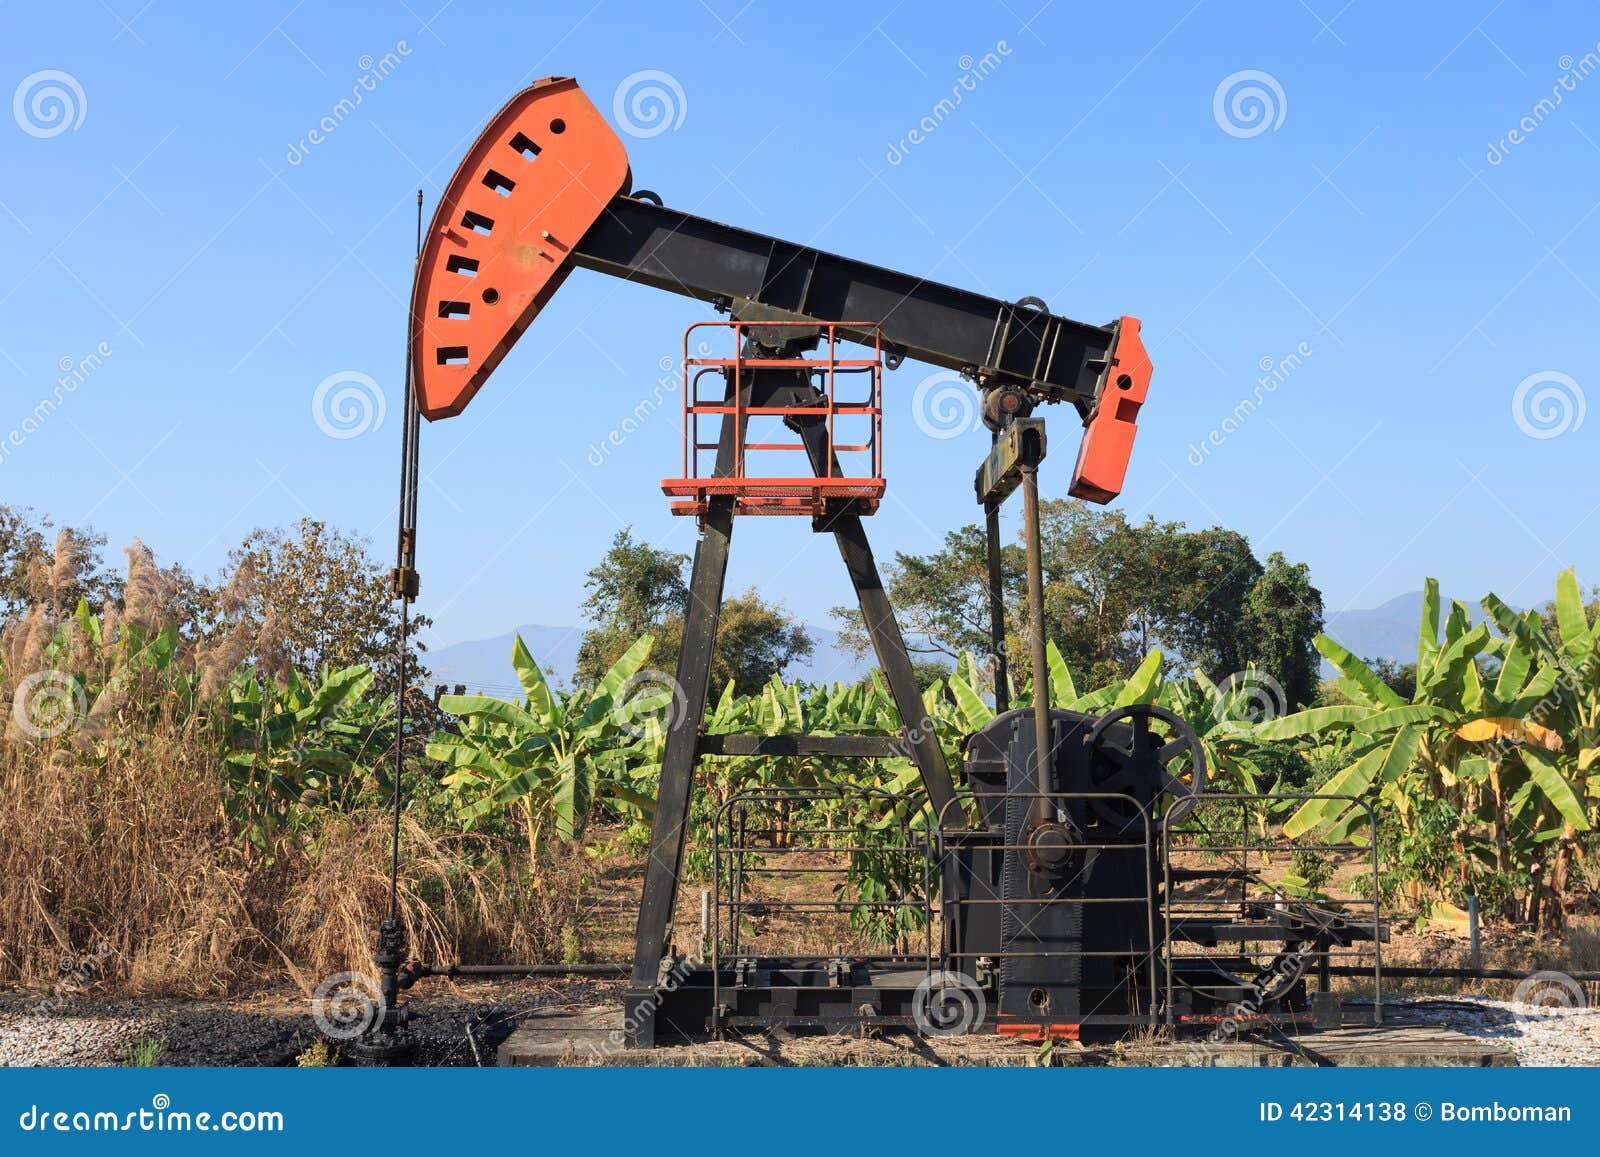 oil pump jack (sucker rod beam) in the banana field